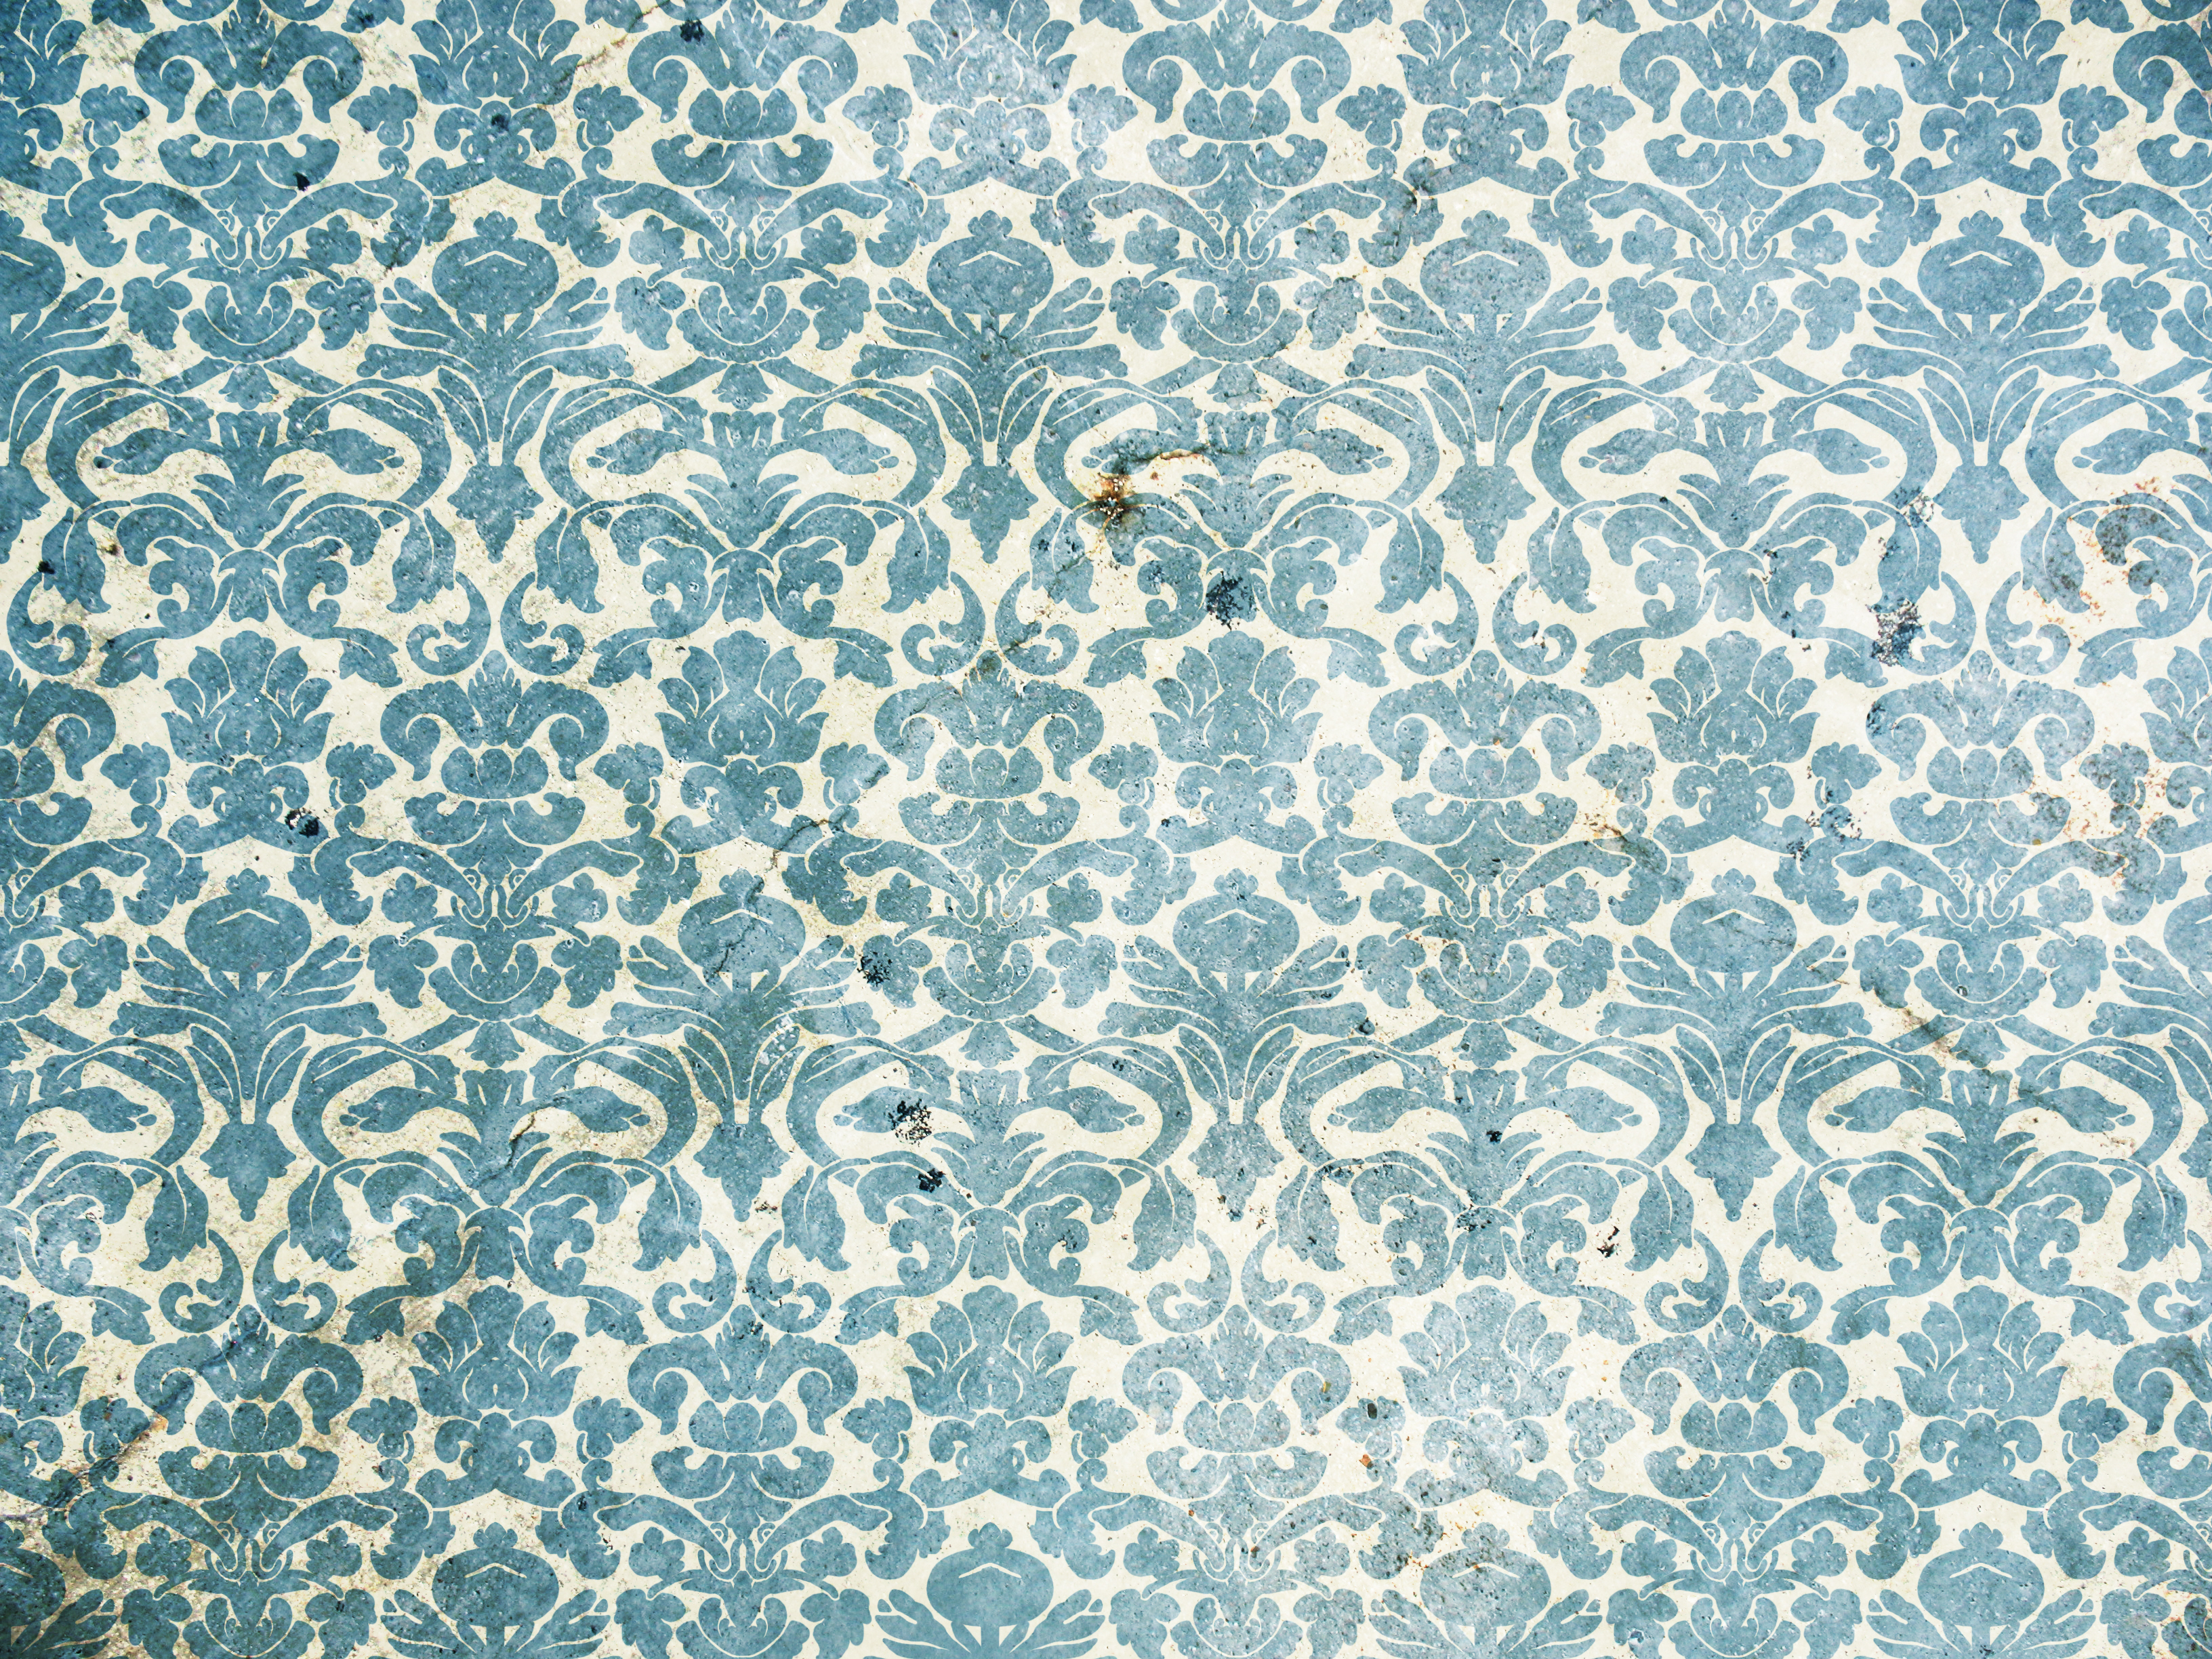 classic wallpaper patterns,pattern,aqua,blue,turquoise,teal